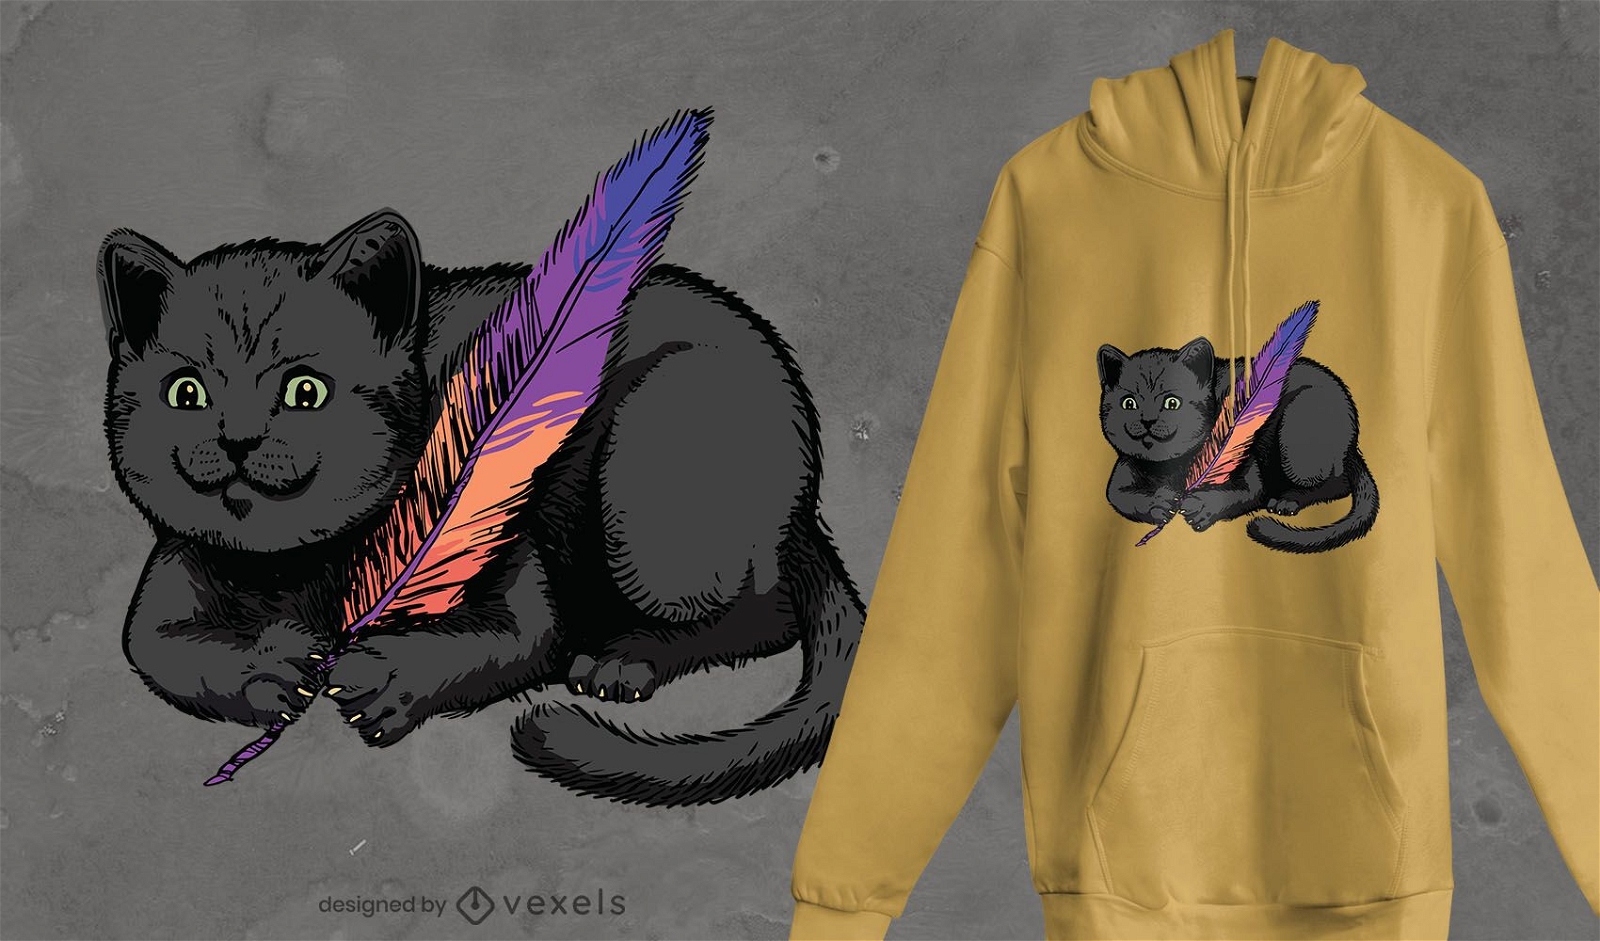 Black cat feather t-shirt design